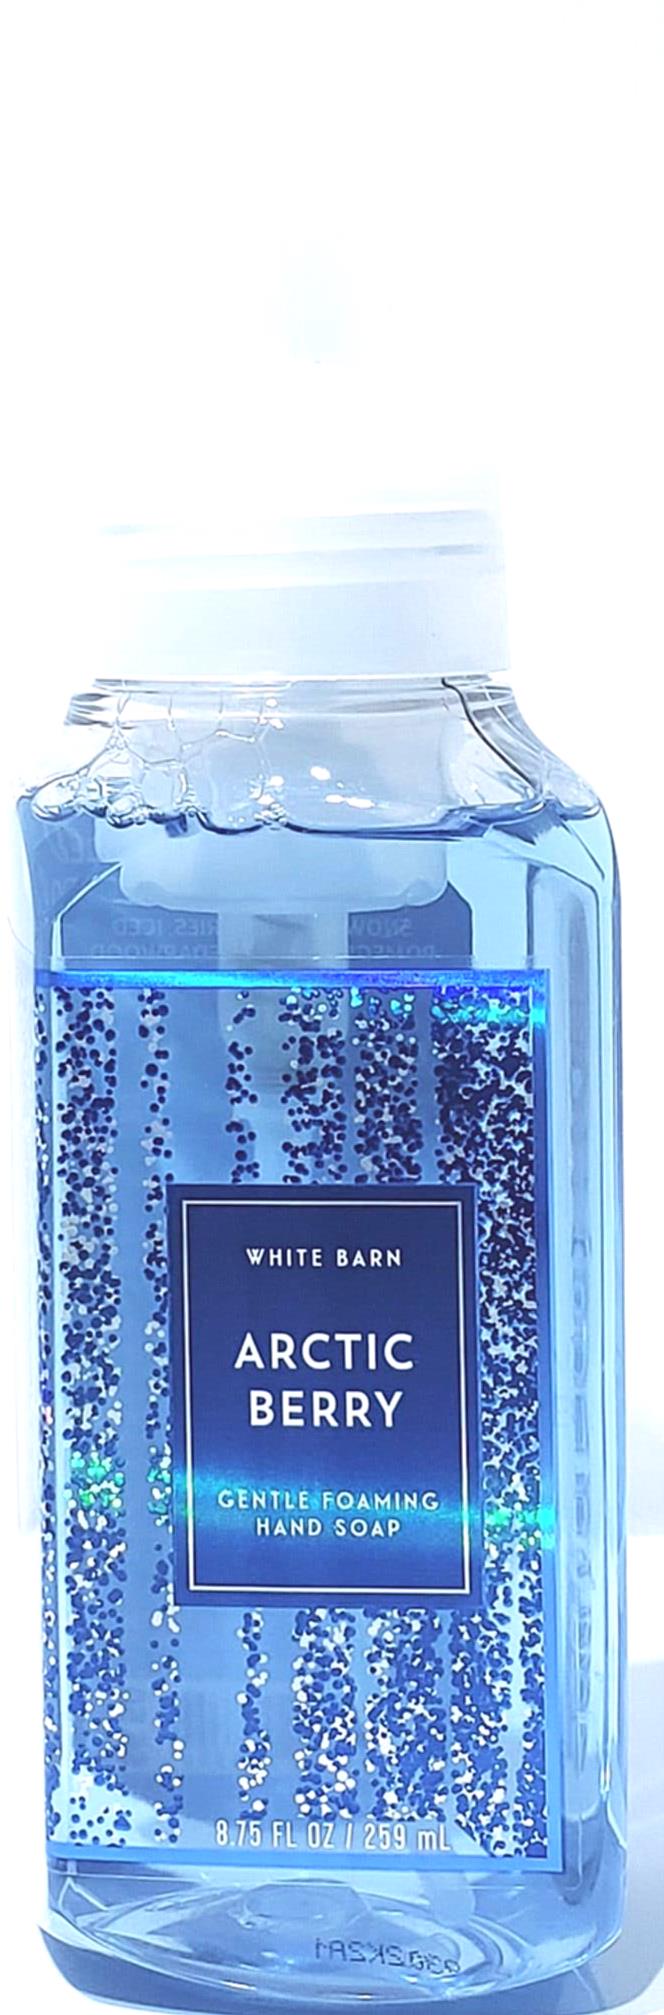 Arctic Blue Soap - 1 Gallon